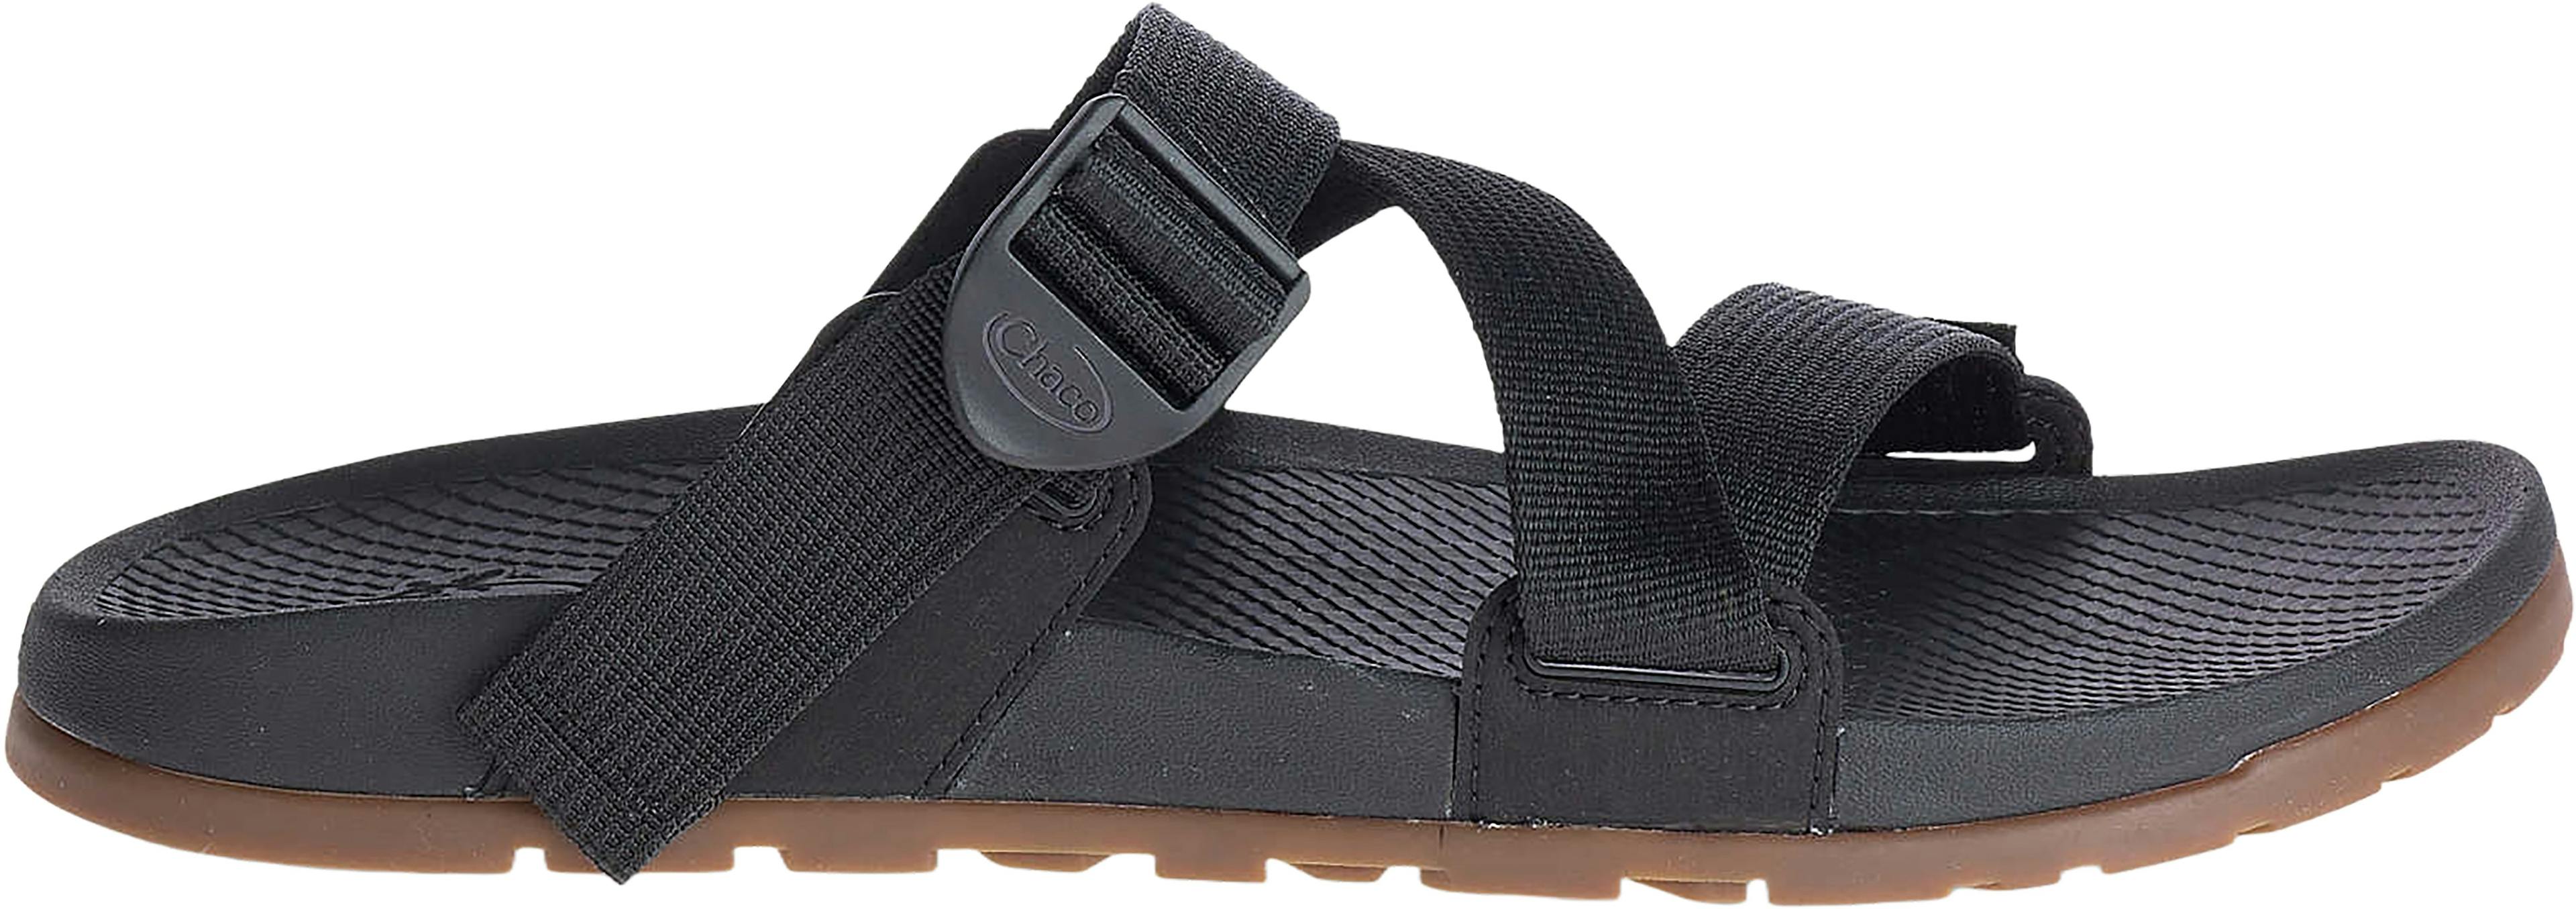 Product image for Lowdown Slide-on Sandals - Men's